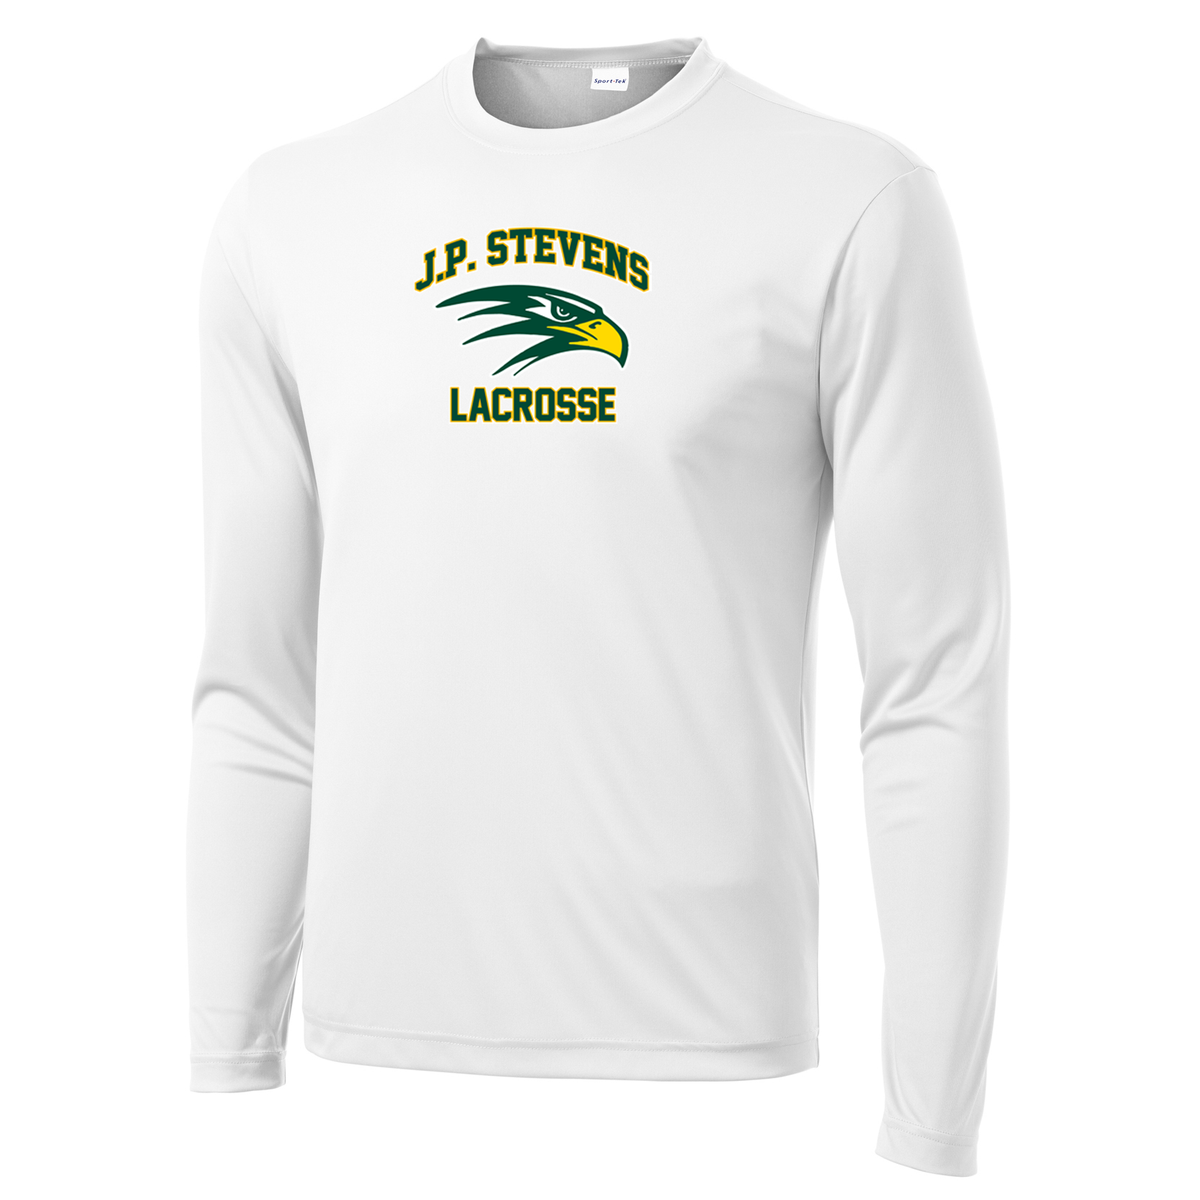 J.P. Stevens Lacrosse Long Sleeve Performance Shirt